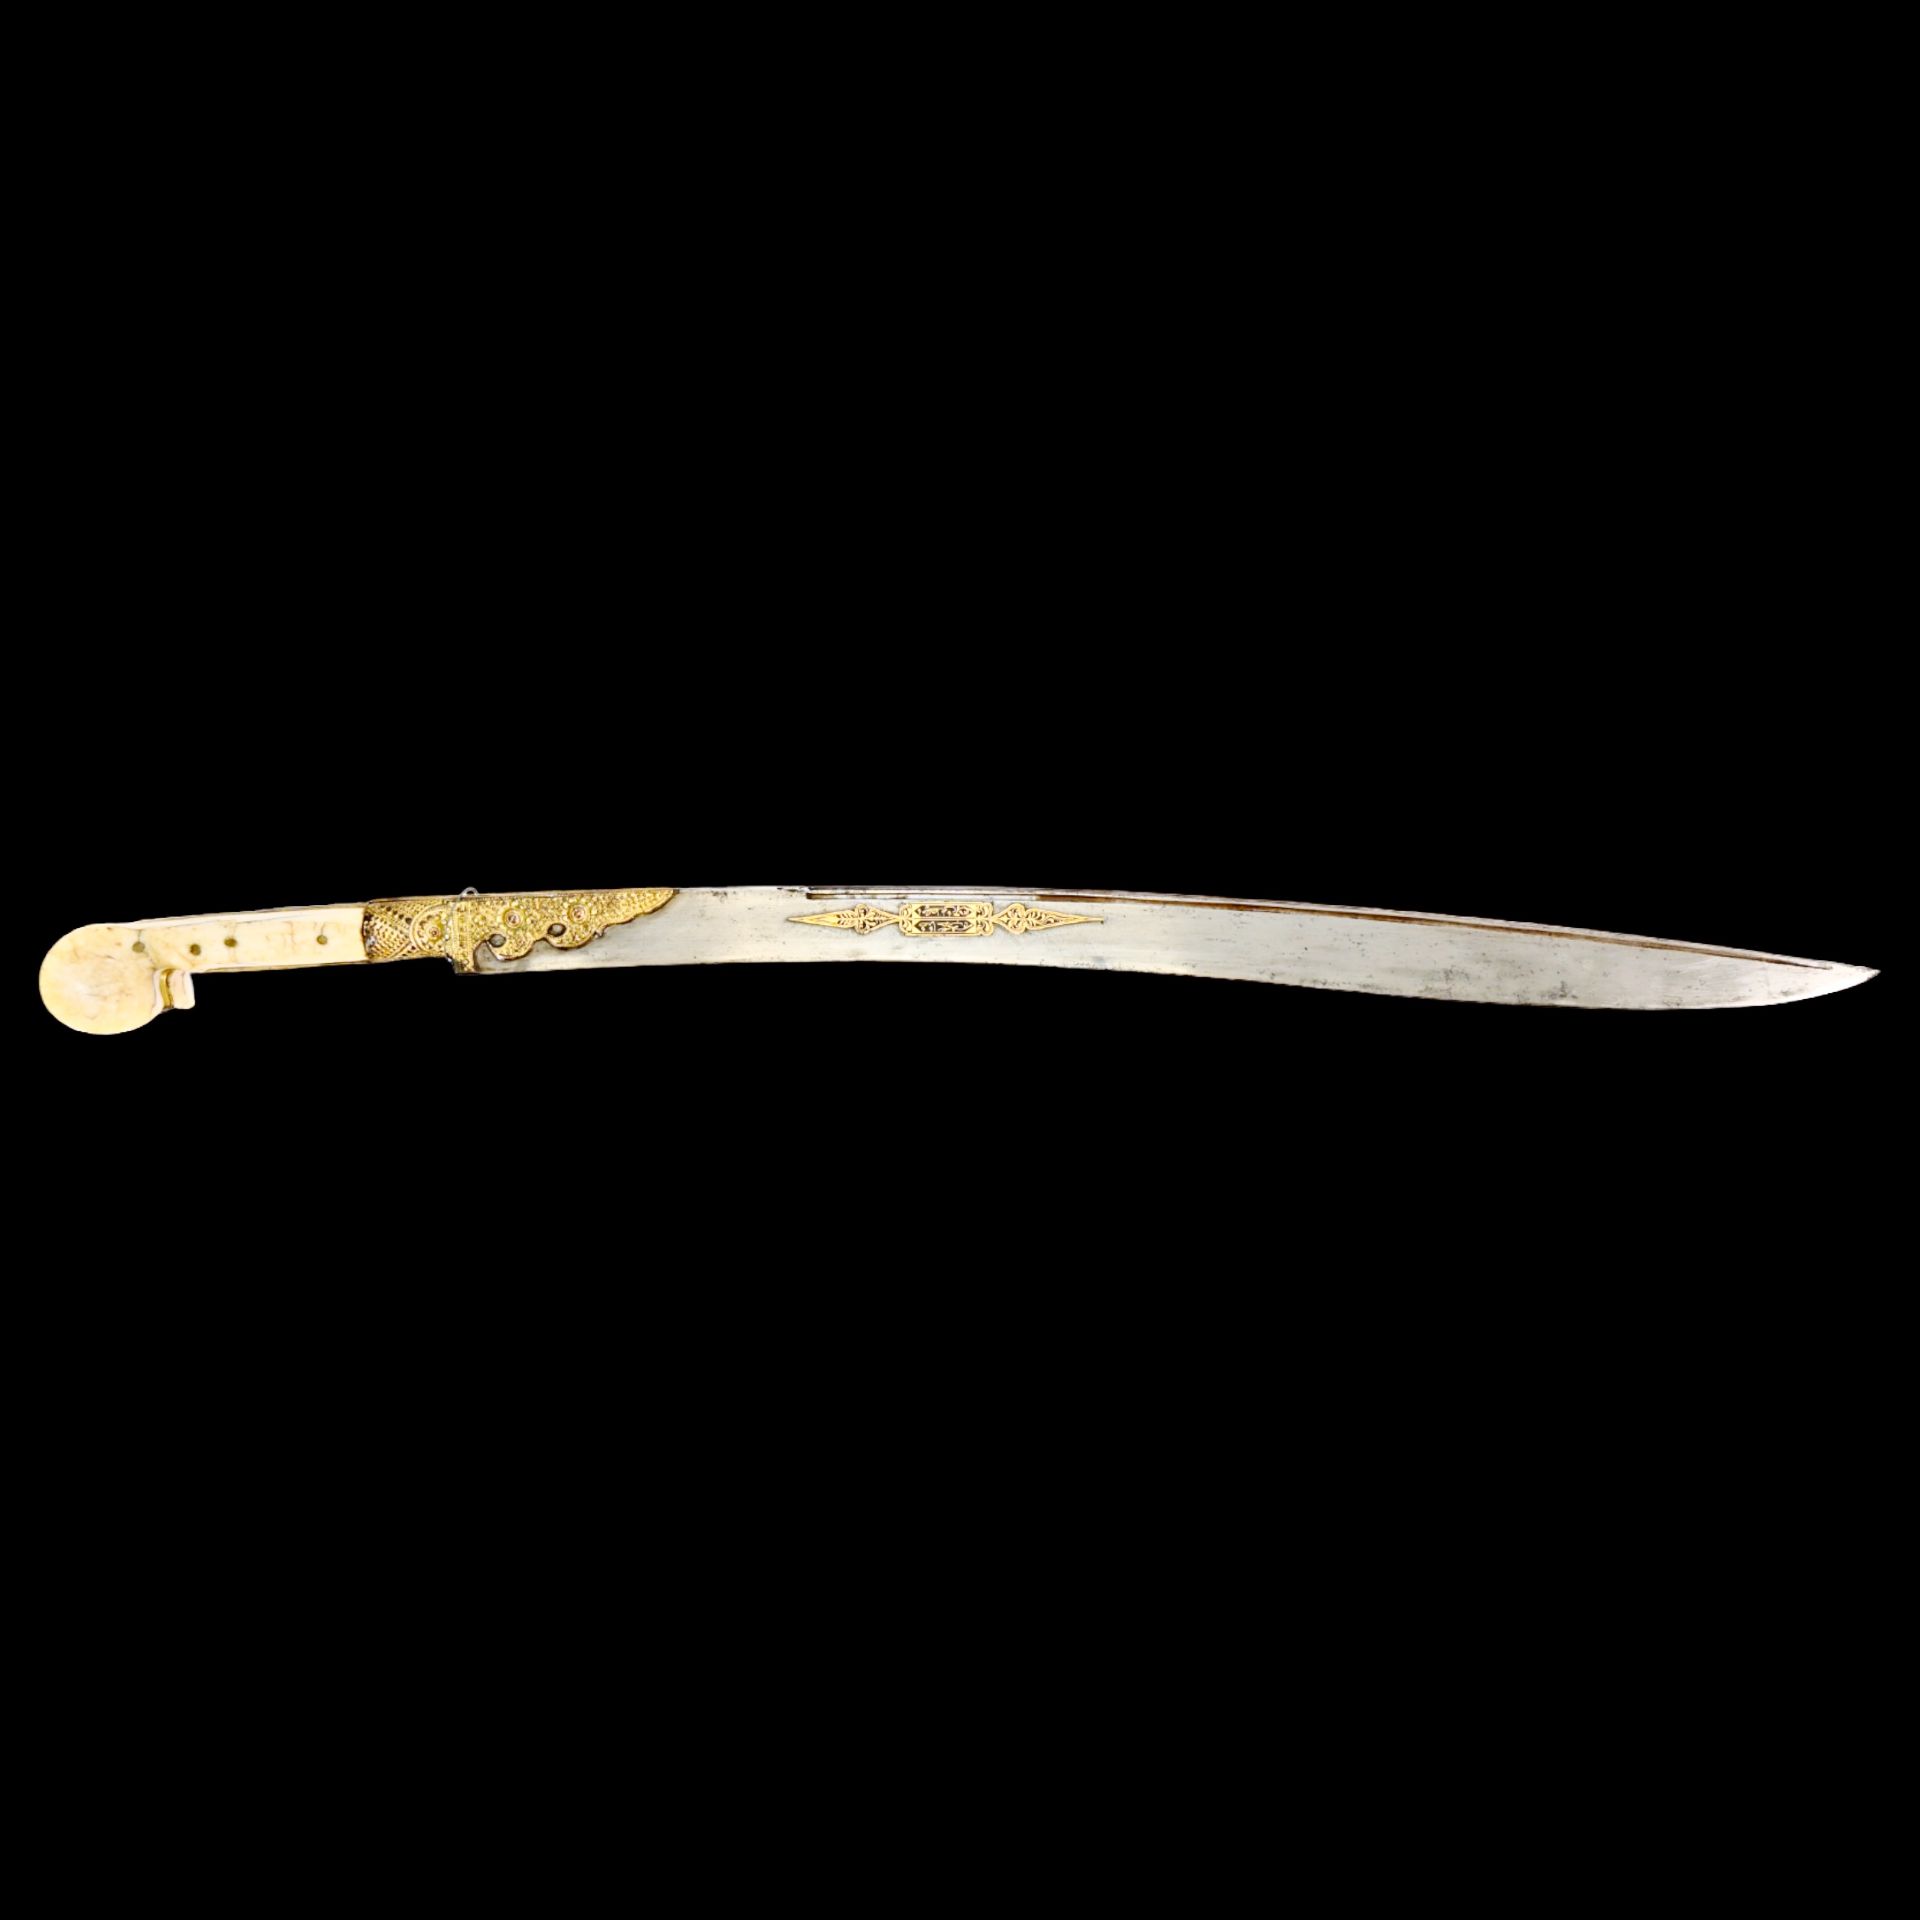 Magnificent Ottoman yatagan sword with bone hilt and gold kofgari on the blade, 1823. - Image 25 of 32